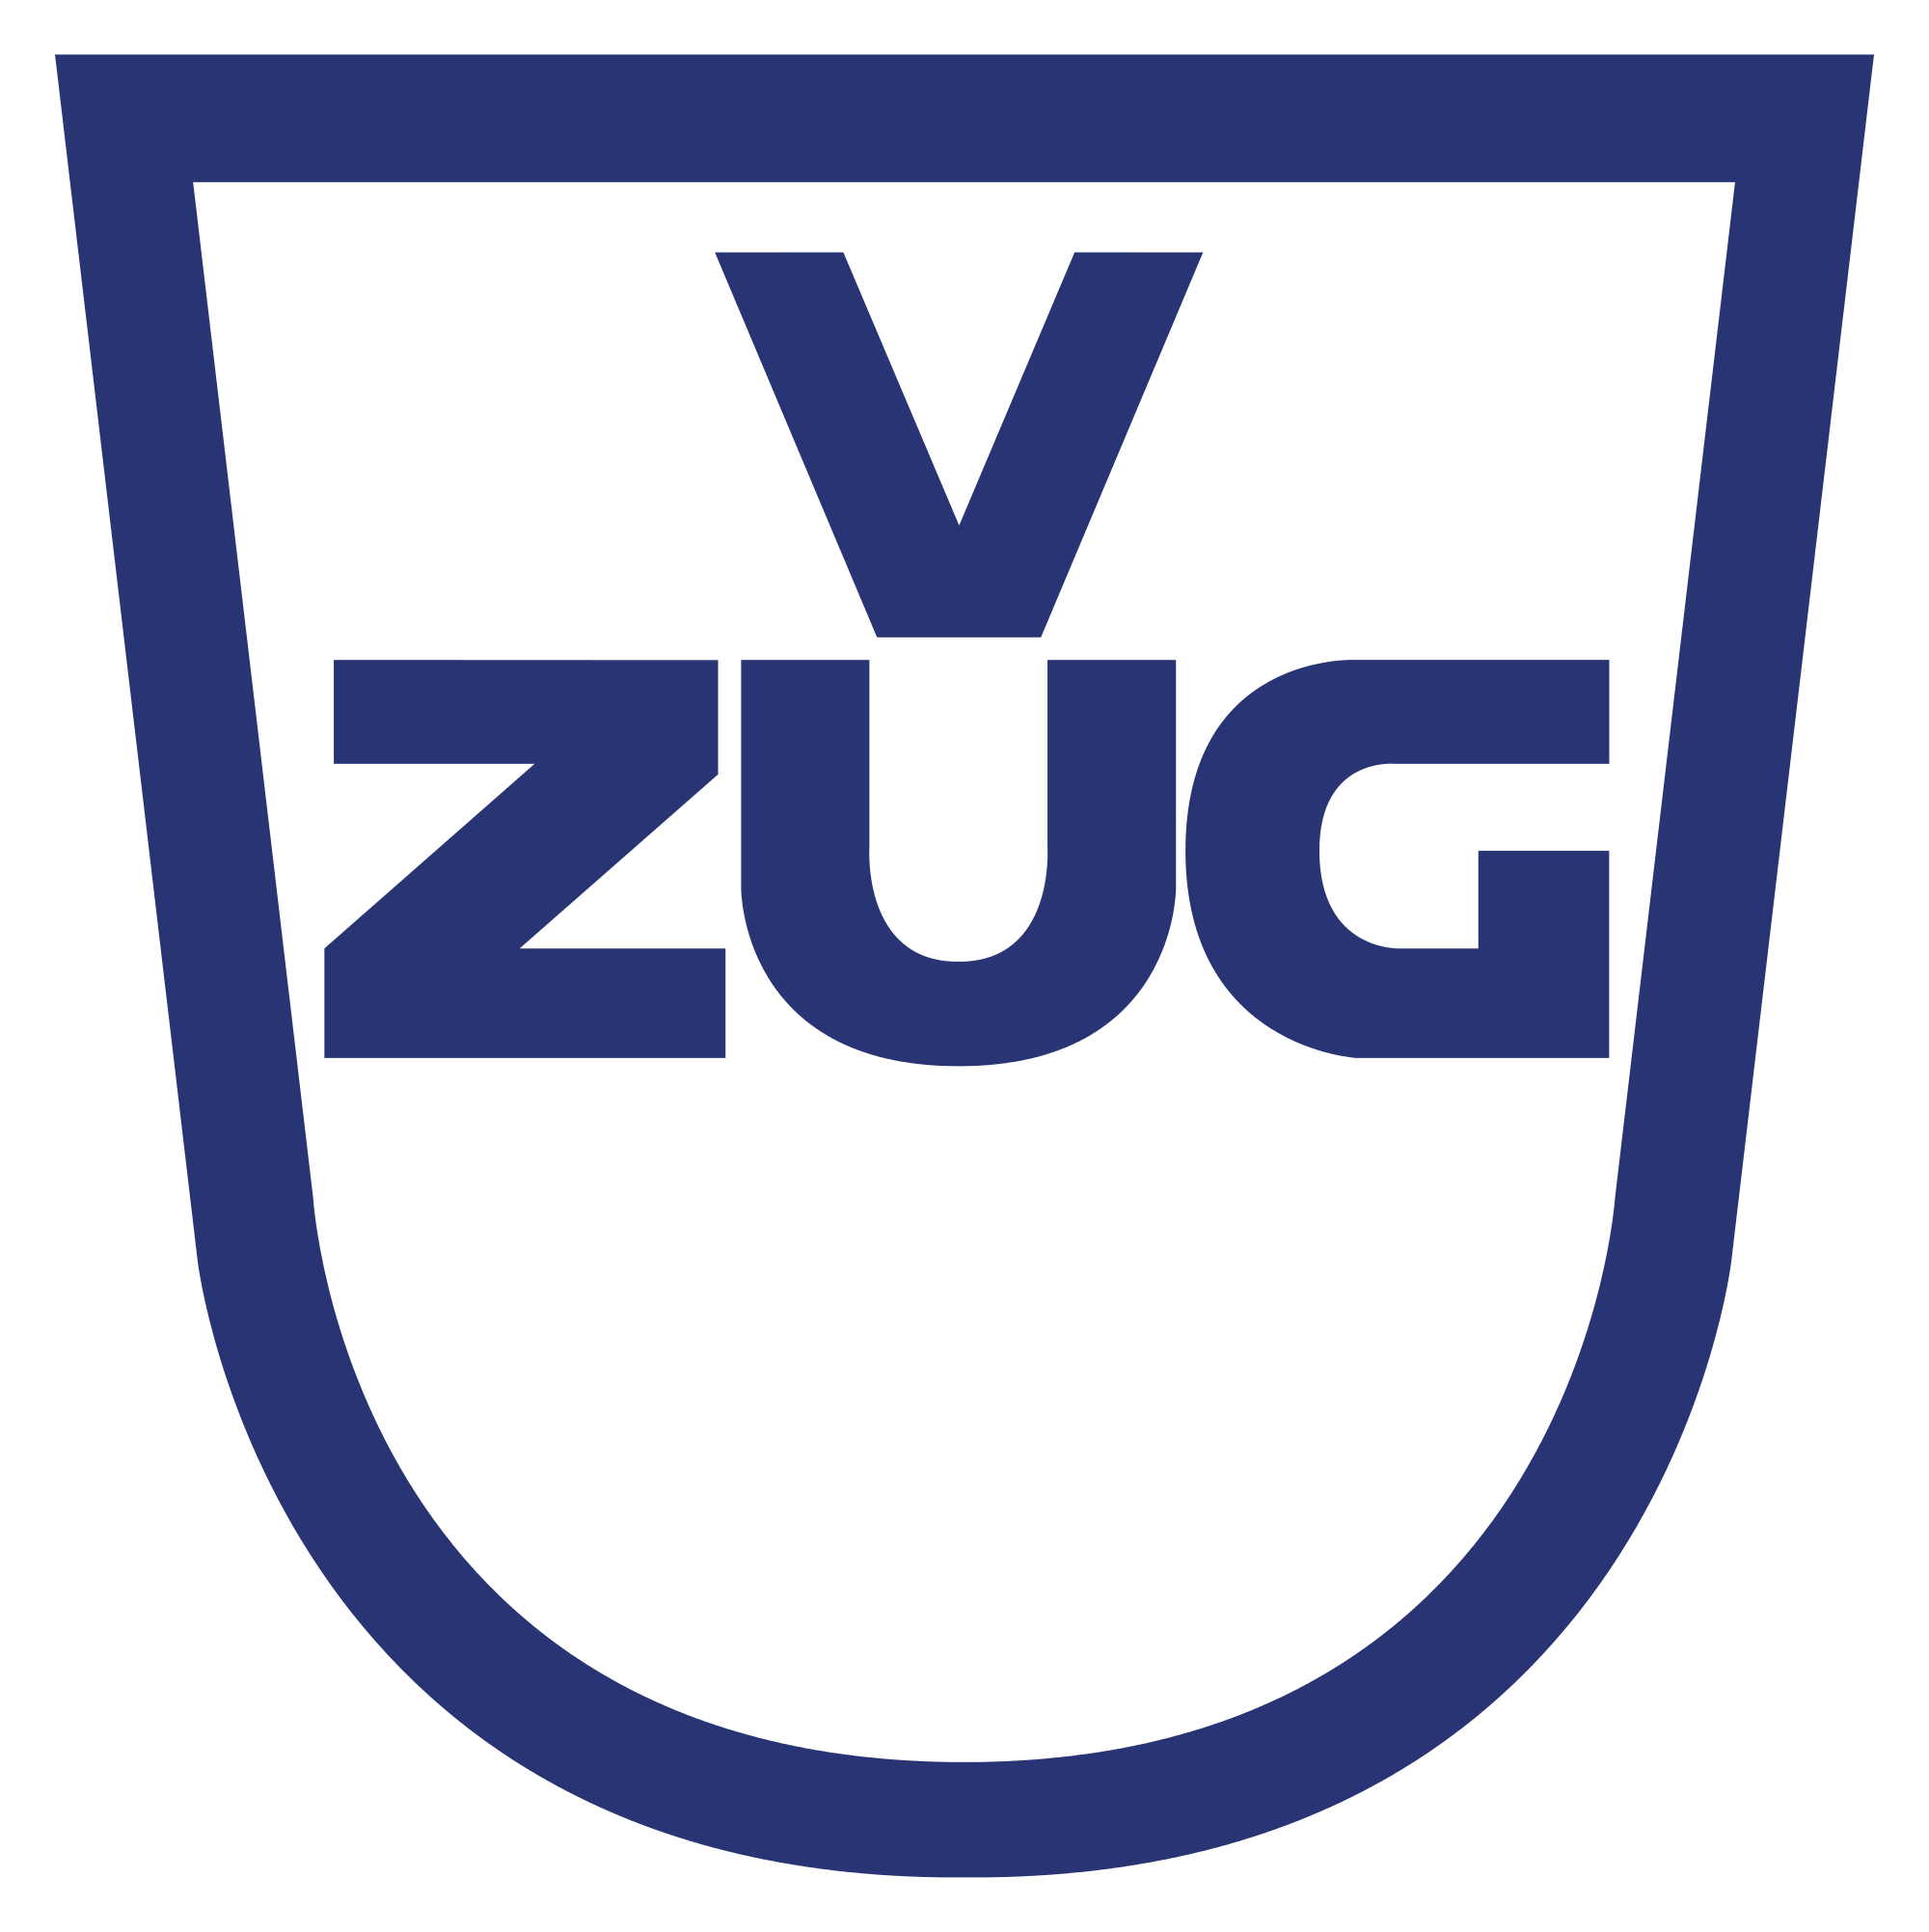 image-10113542-V-Zug_logo.svg-8f14e.png